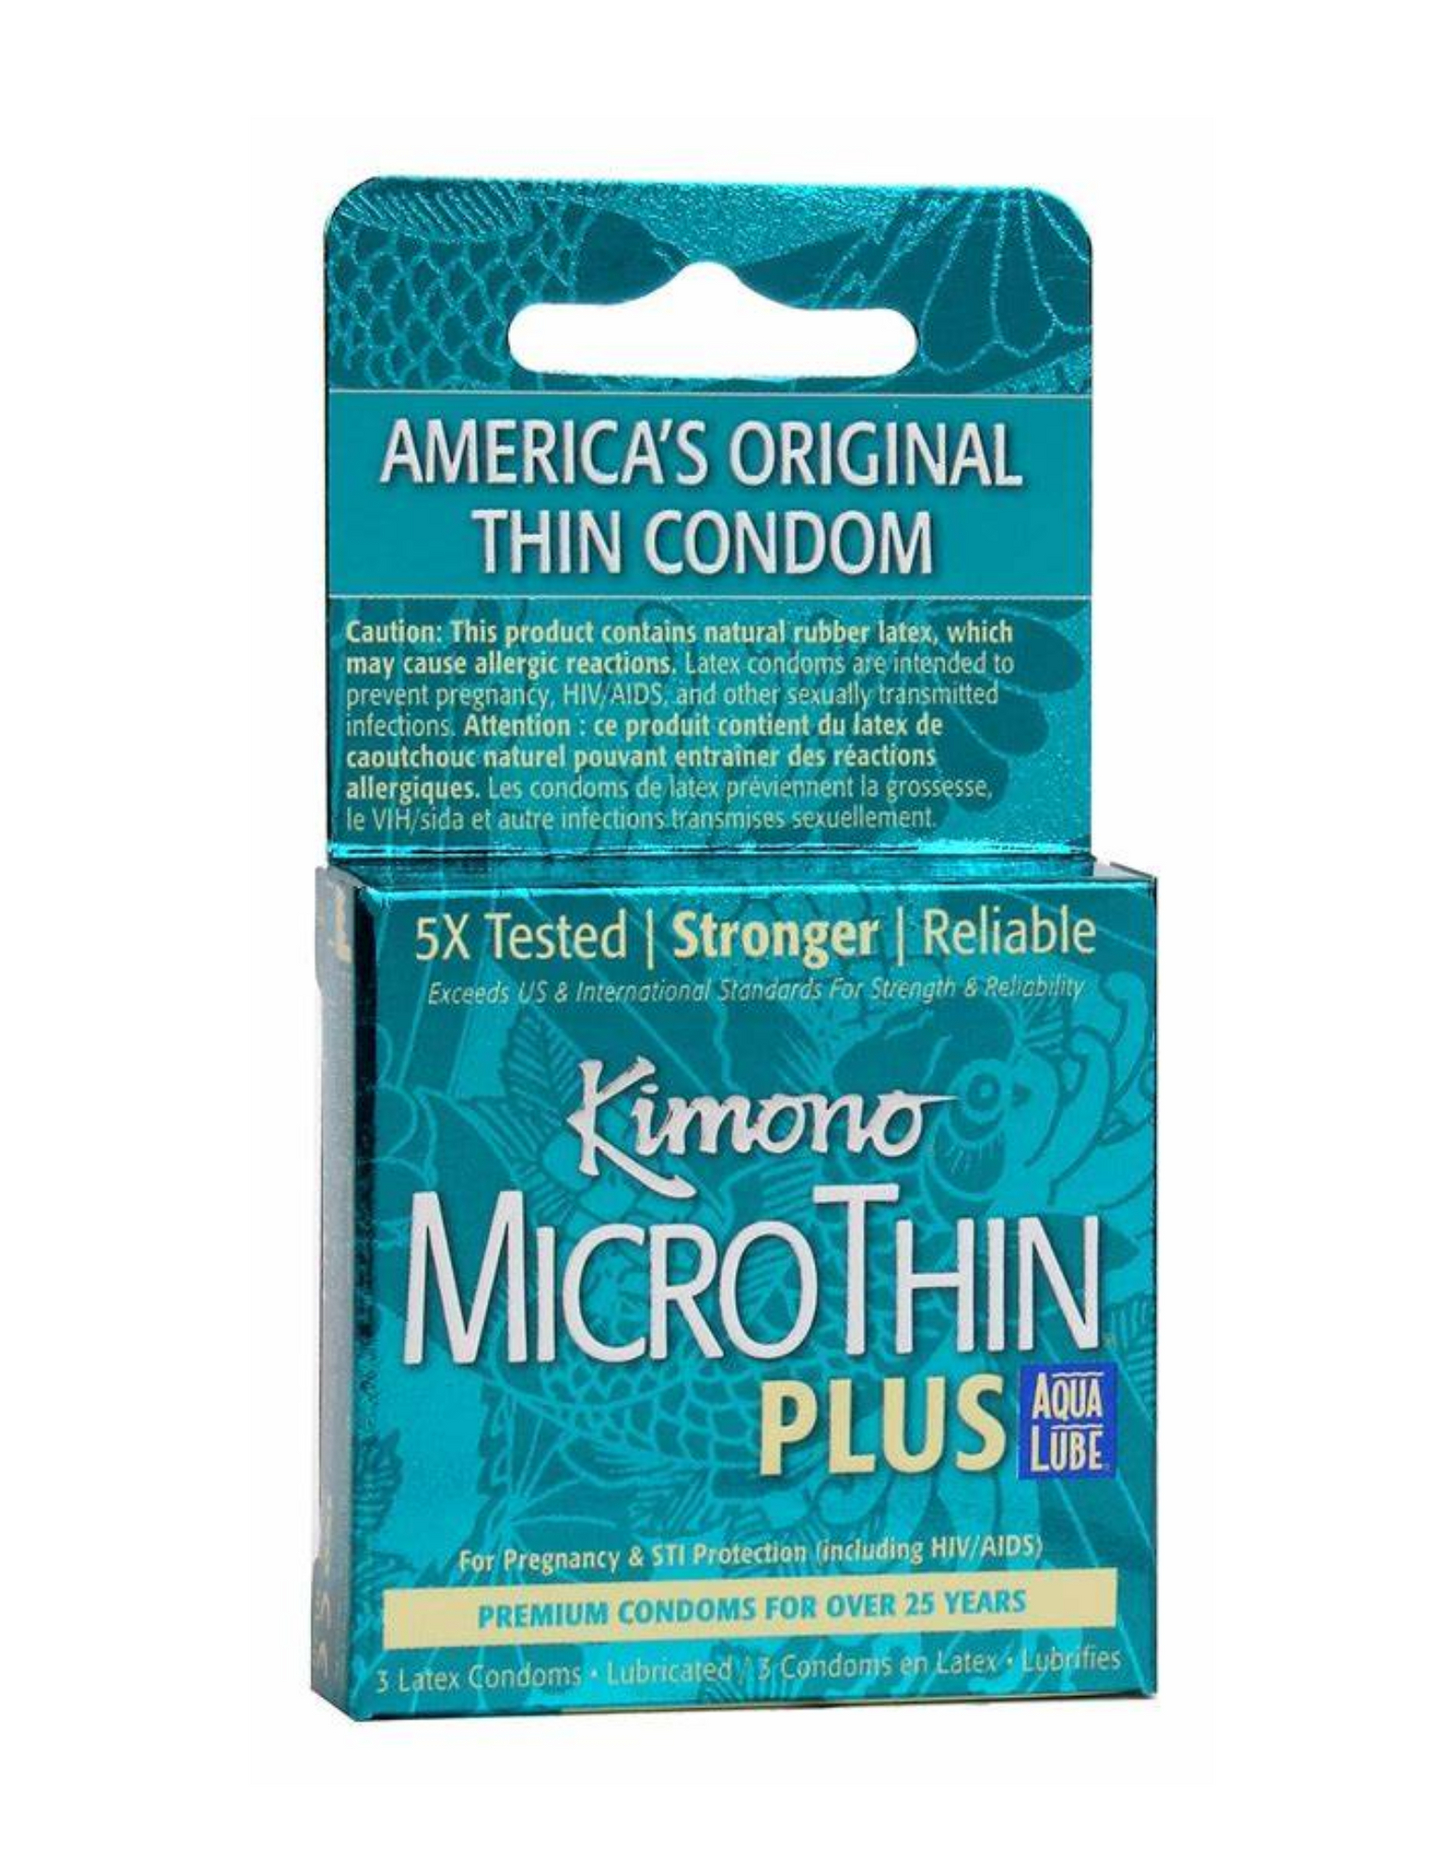 Photo of the Aqua Lube MicroThin Plus Condoms from Kimono (light blue box).